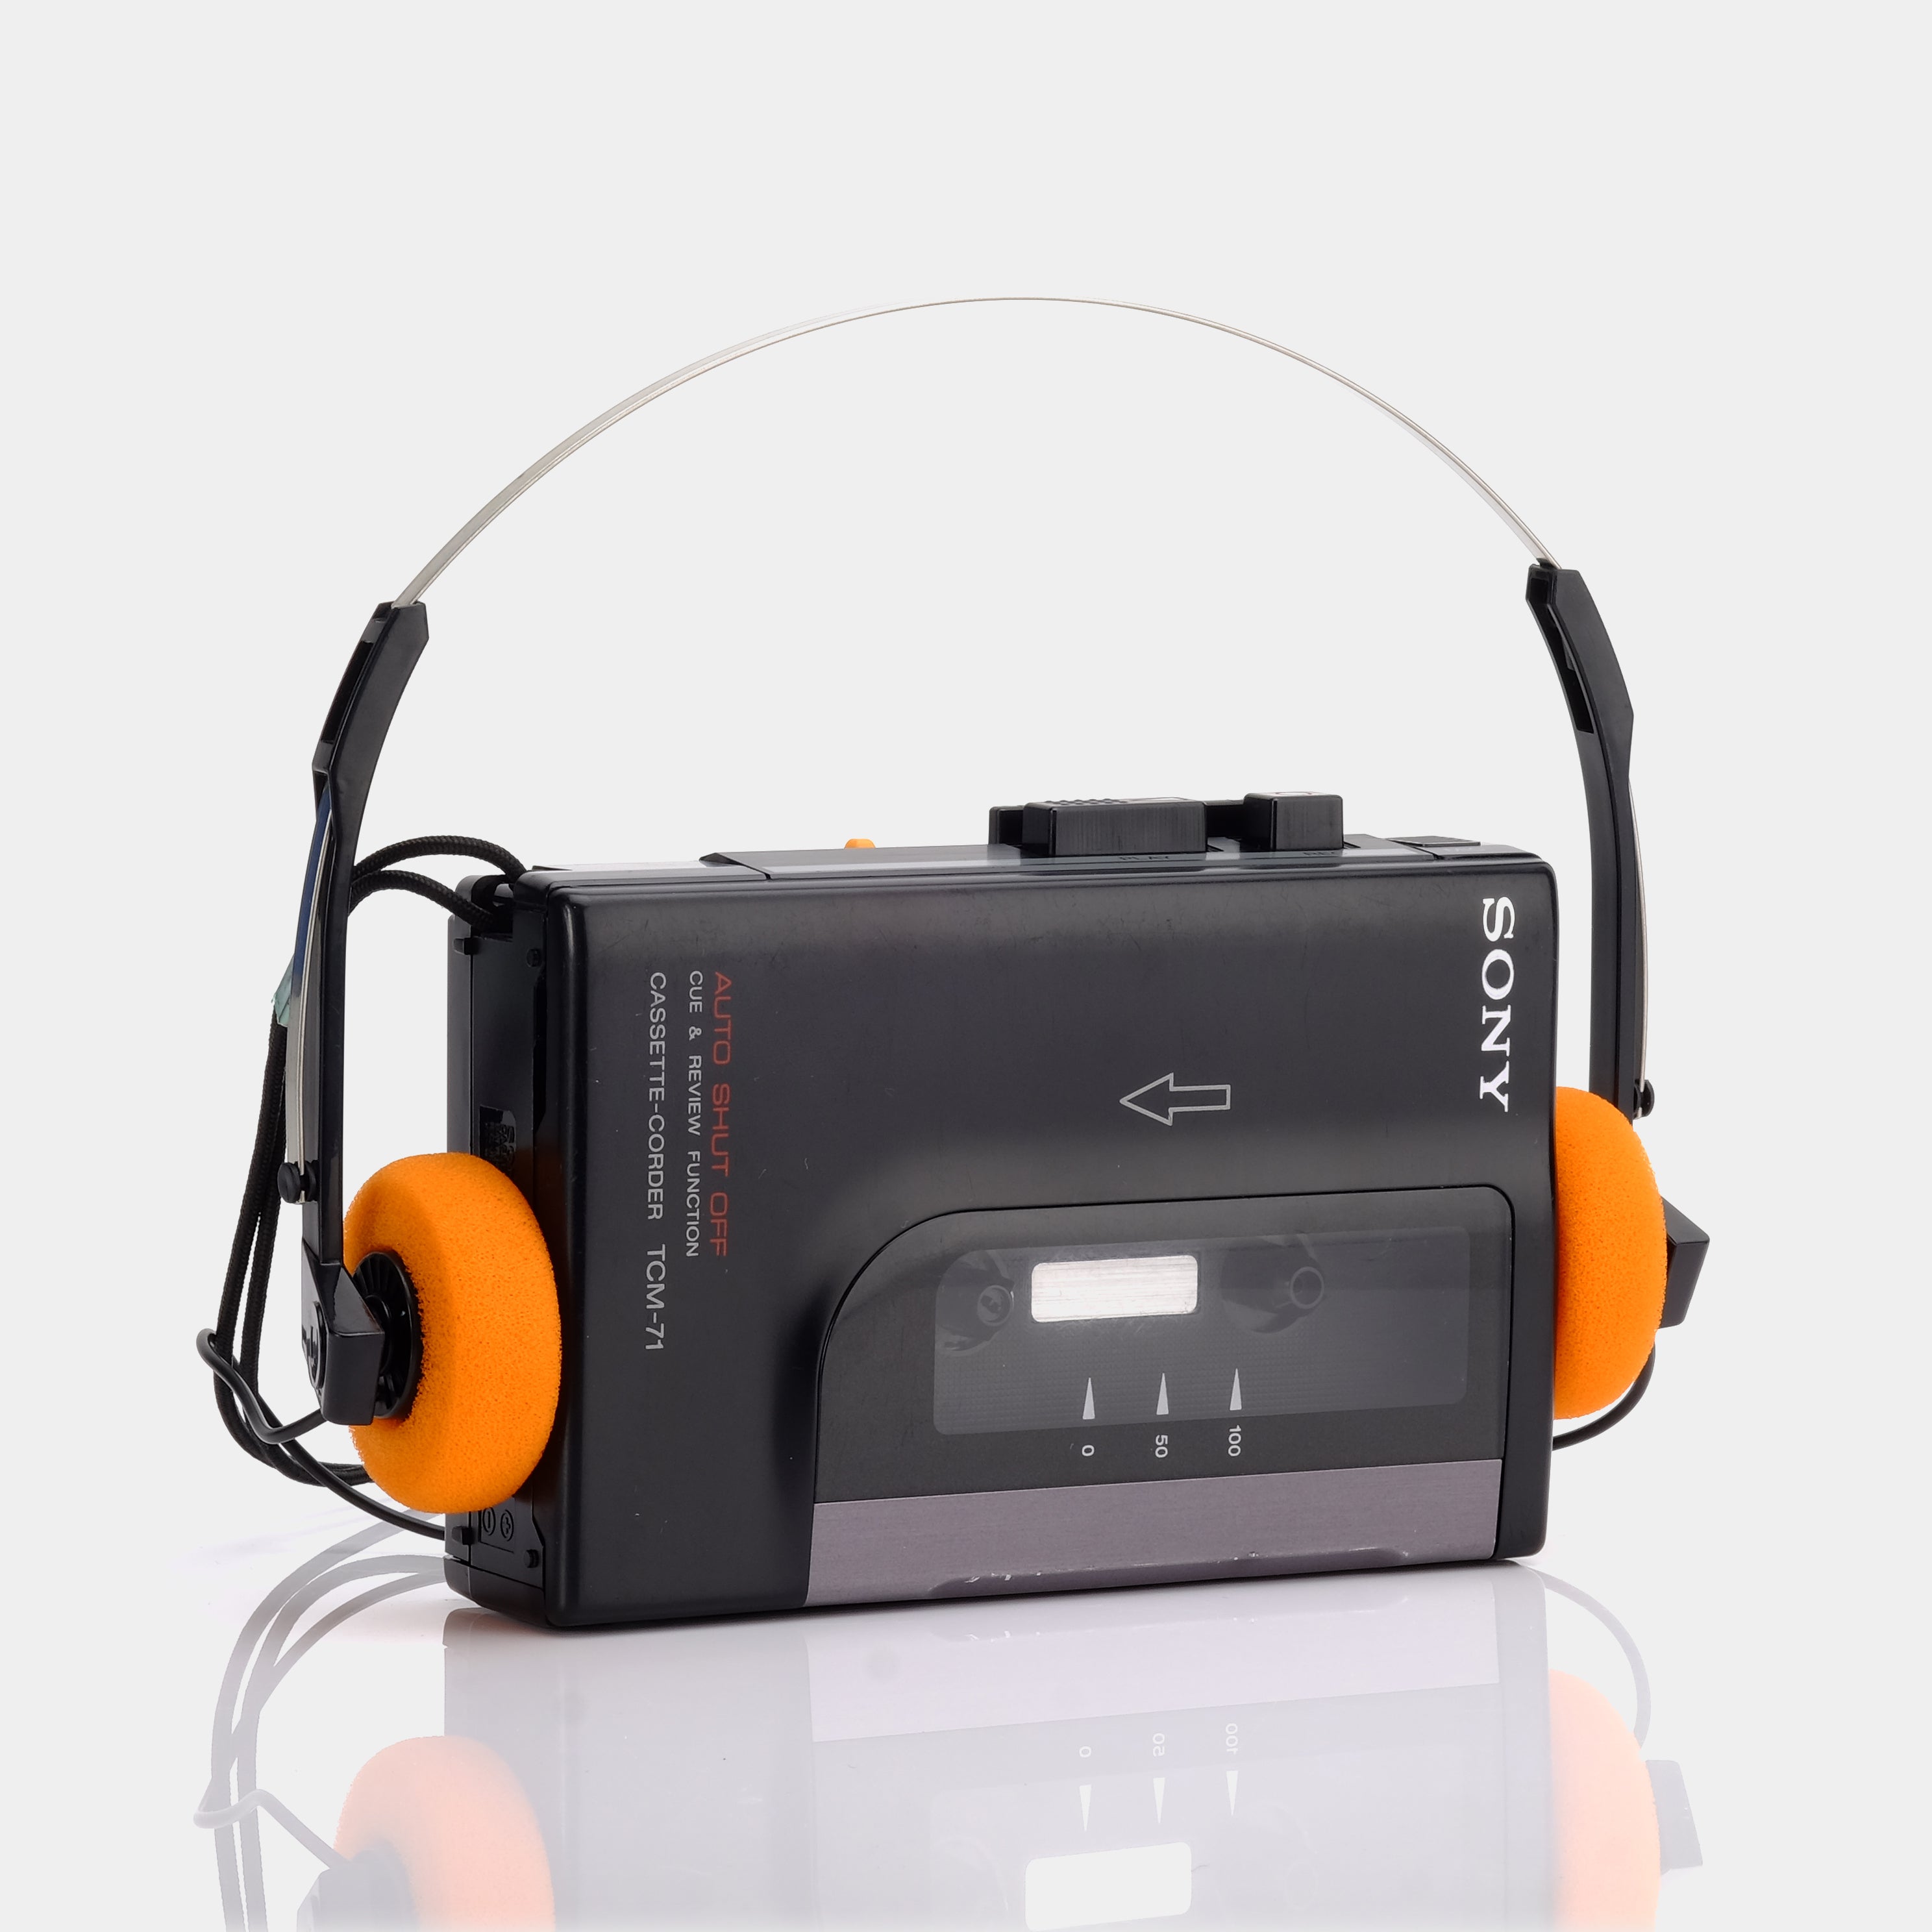 Sony Walkman TCM-71 Portable Cassette Player